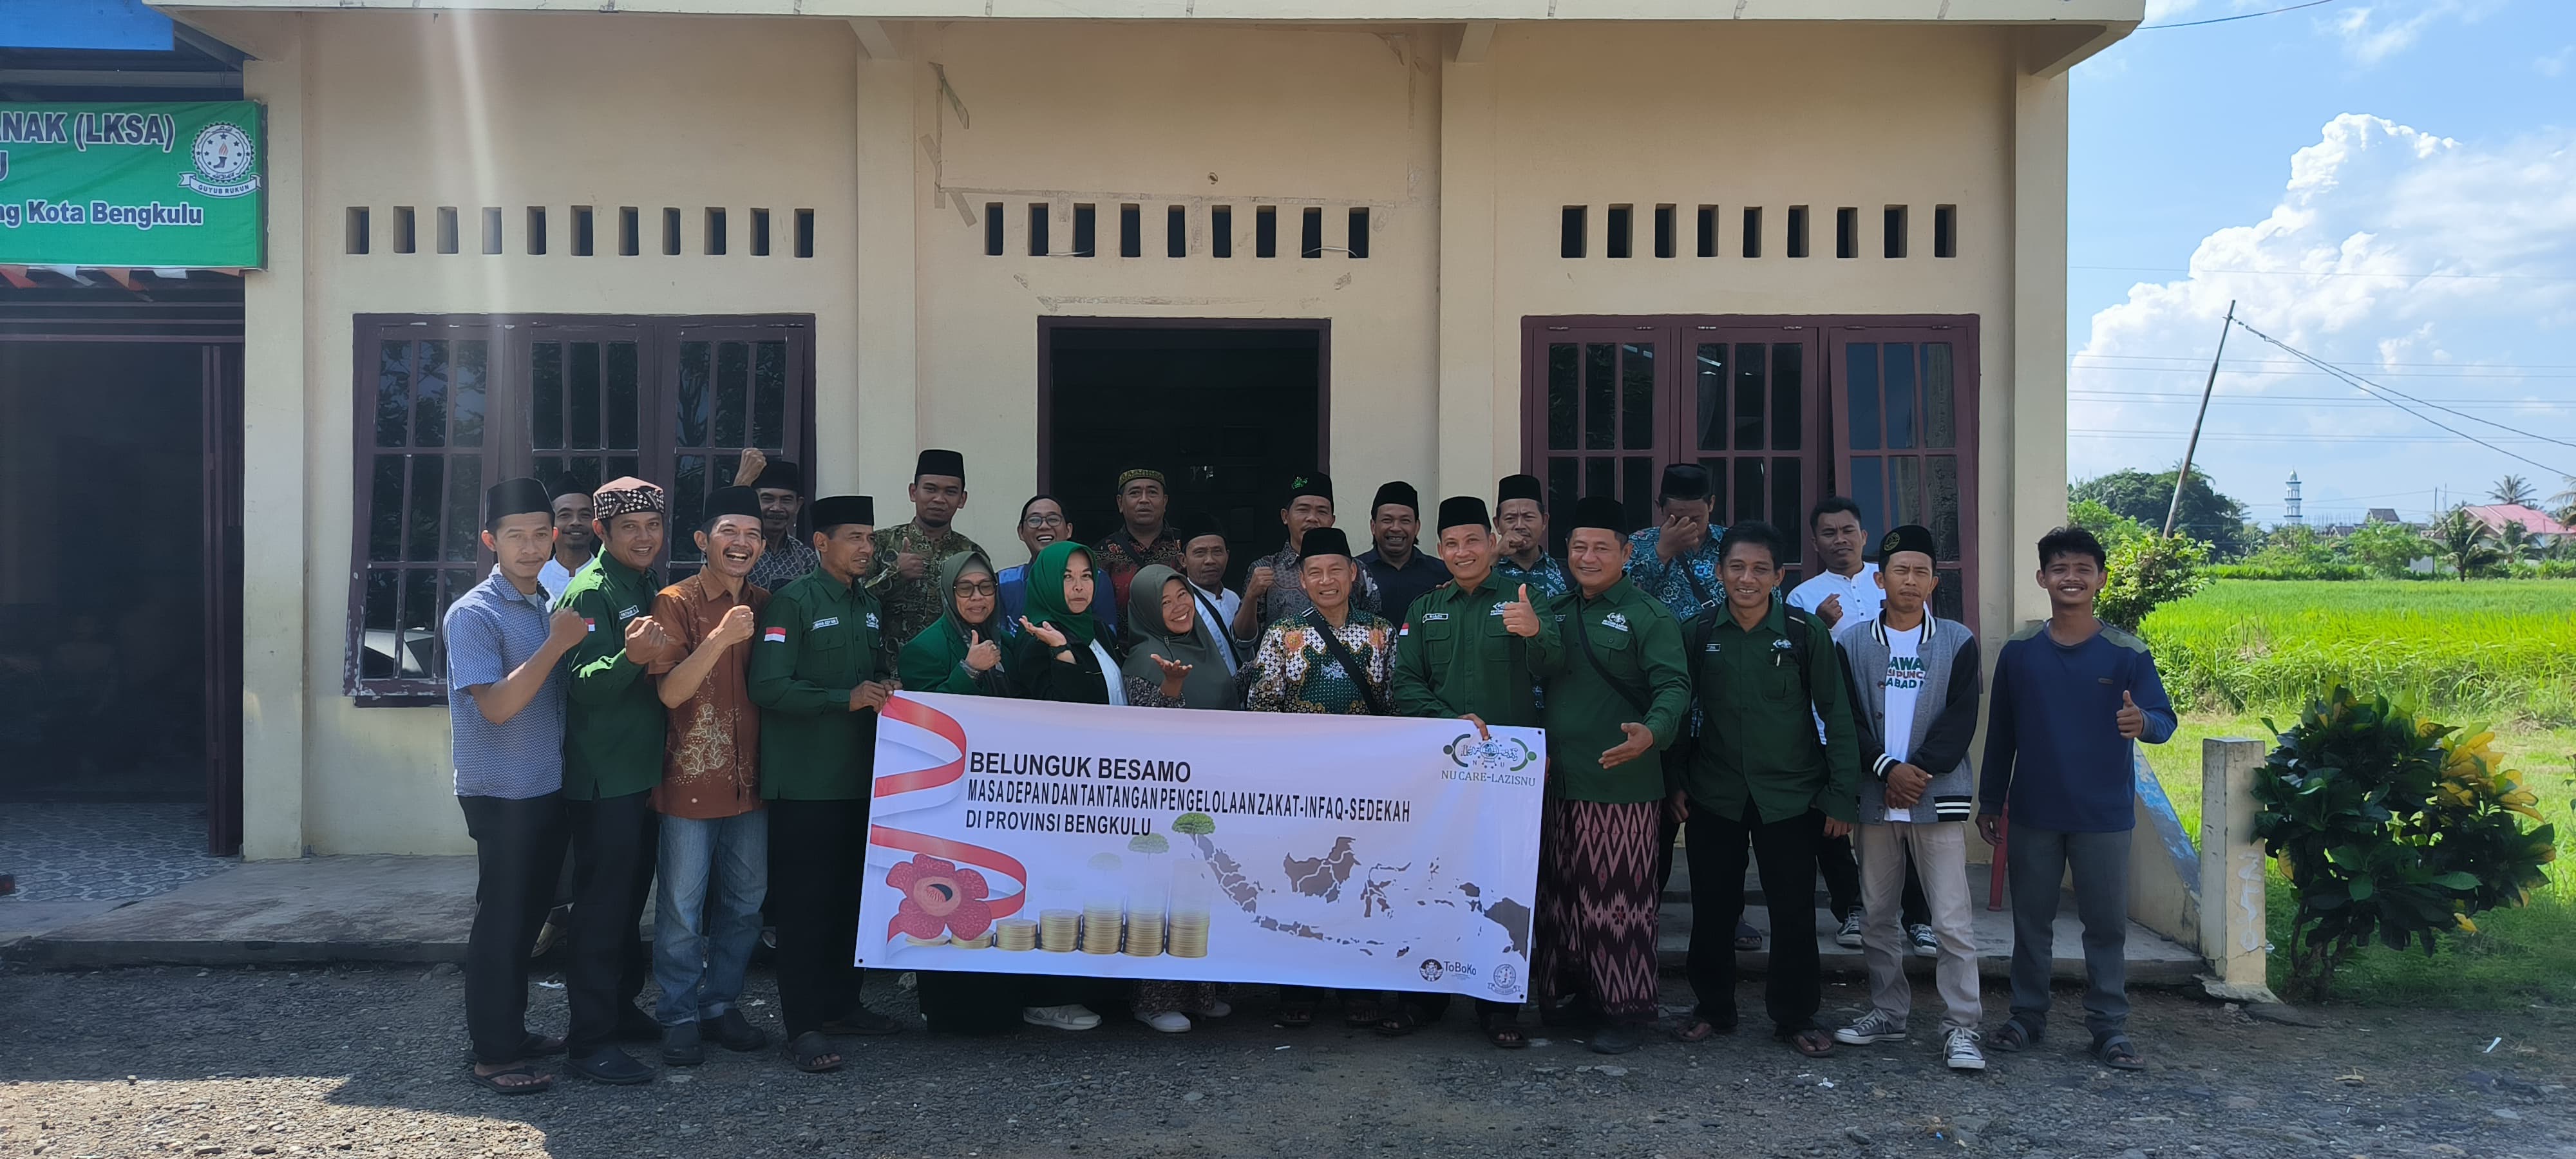 NU Care Lazisnu Se-Provinsi Bengkulu “Belunguk Besamo” Bahas Masa Depan dan Tantangan Pengelolaan ZIS